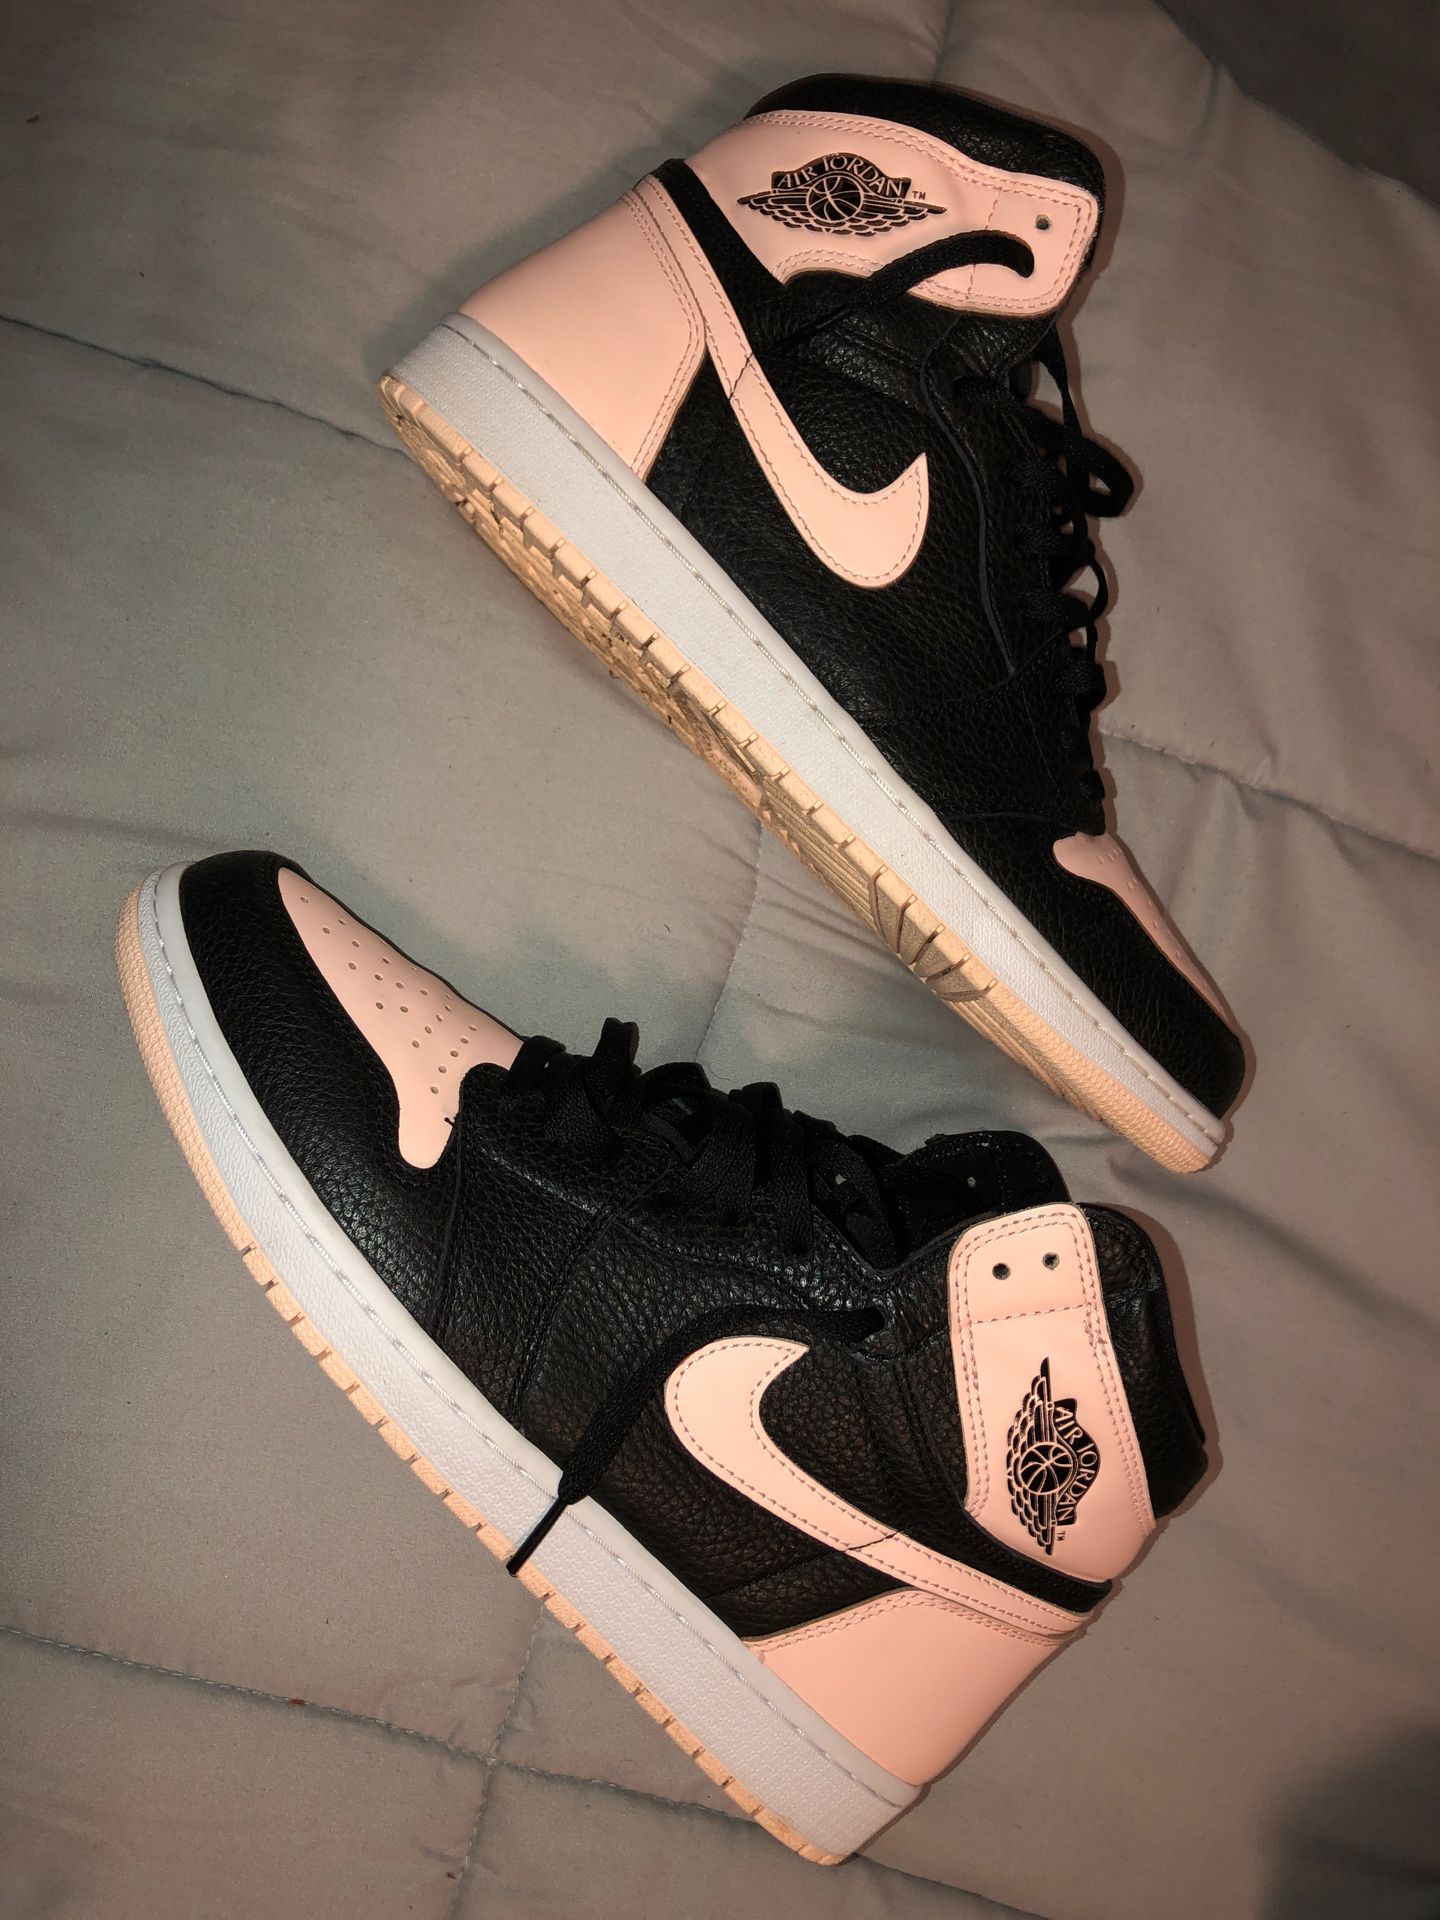 Air Jordan 1s black/pink size 11.5